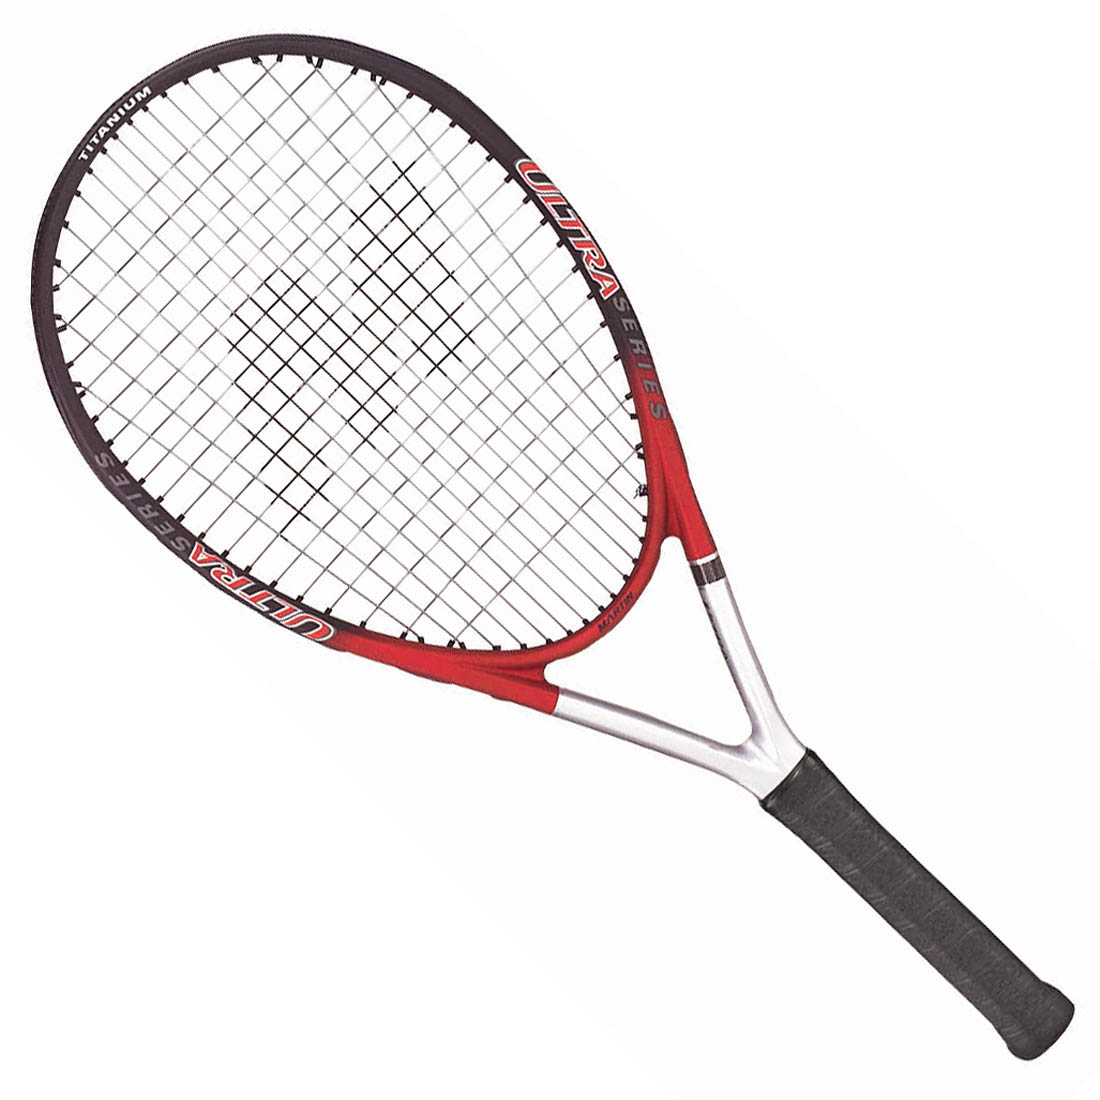 E124711 Martin ULTRA 110 Tennis Racket